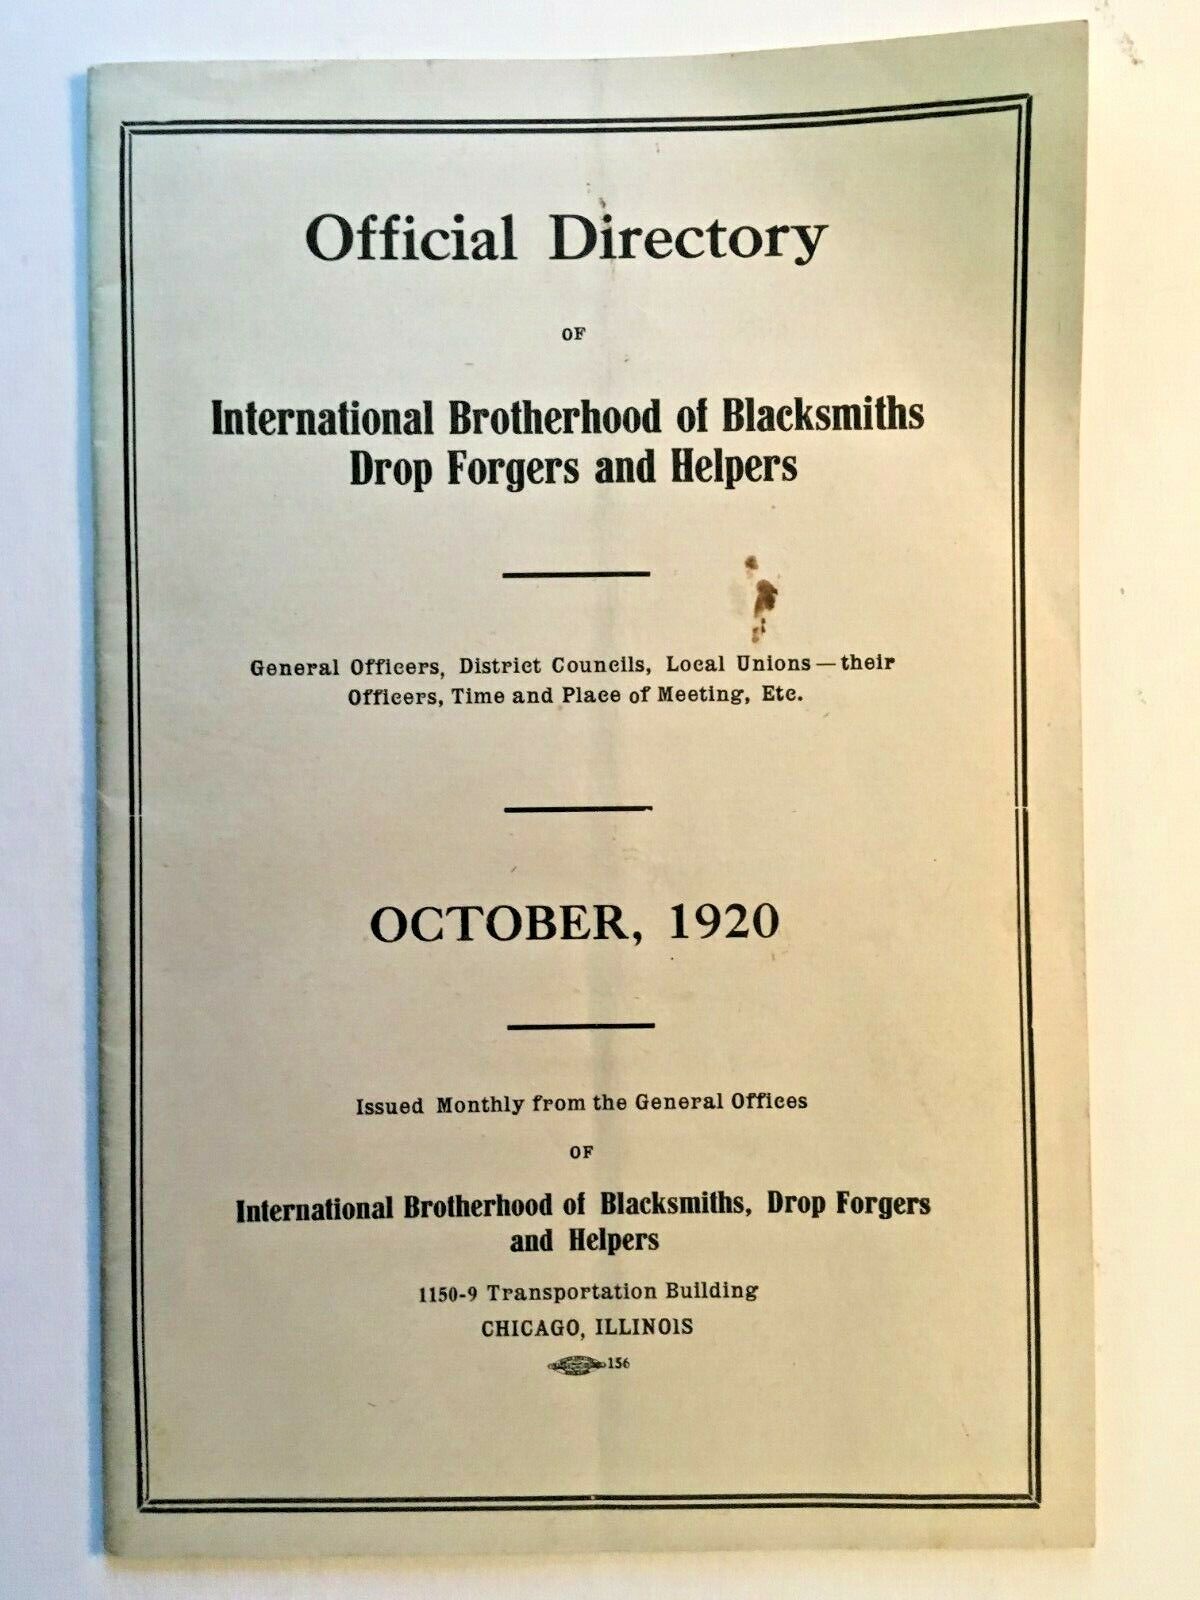 American Labor Unions 1920 INTERNATIONAL BROTHERHOOD OF BLACKSMITHS DIRECTORY 